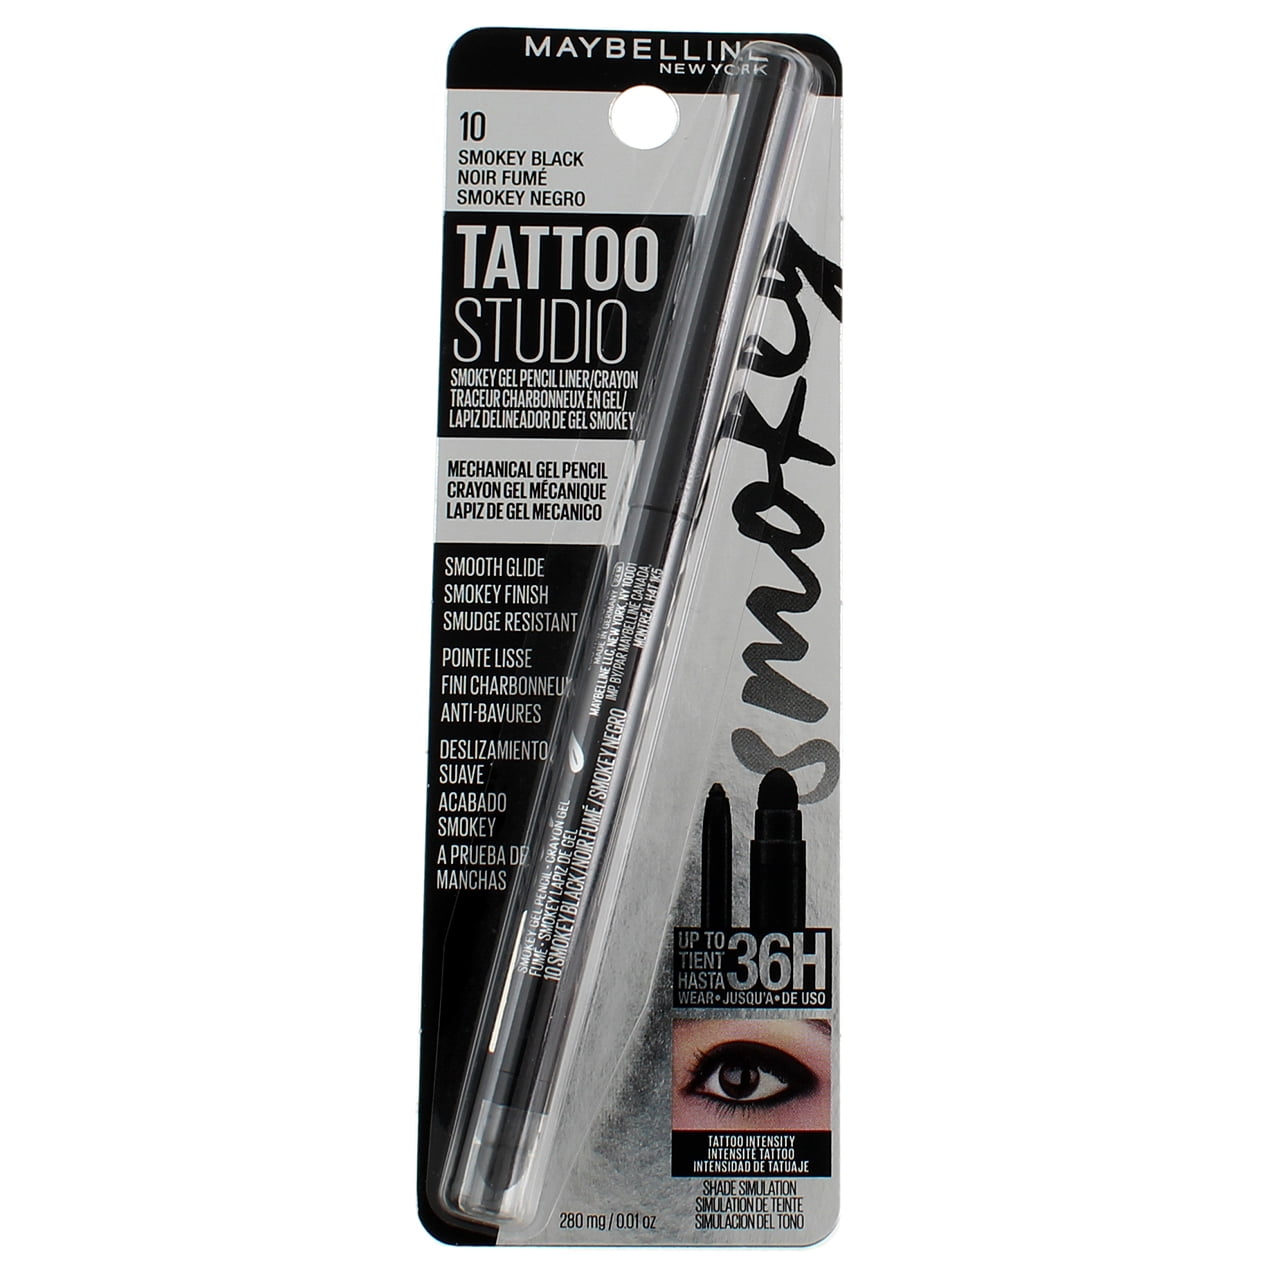 Maybelline TattooStudio Waterproof Pencil Eyeliner 0.01 Makeup 36hr Pencil oz, Gel Liner Wear Long Black, Smudgeproof Matte Lasting Oz. Blendable Smokey Finish Mechanical